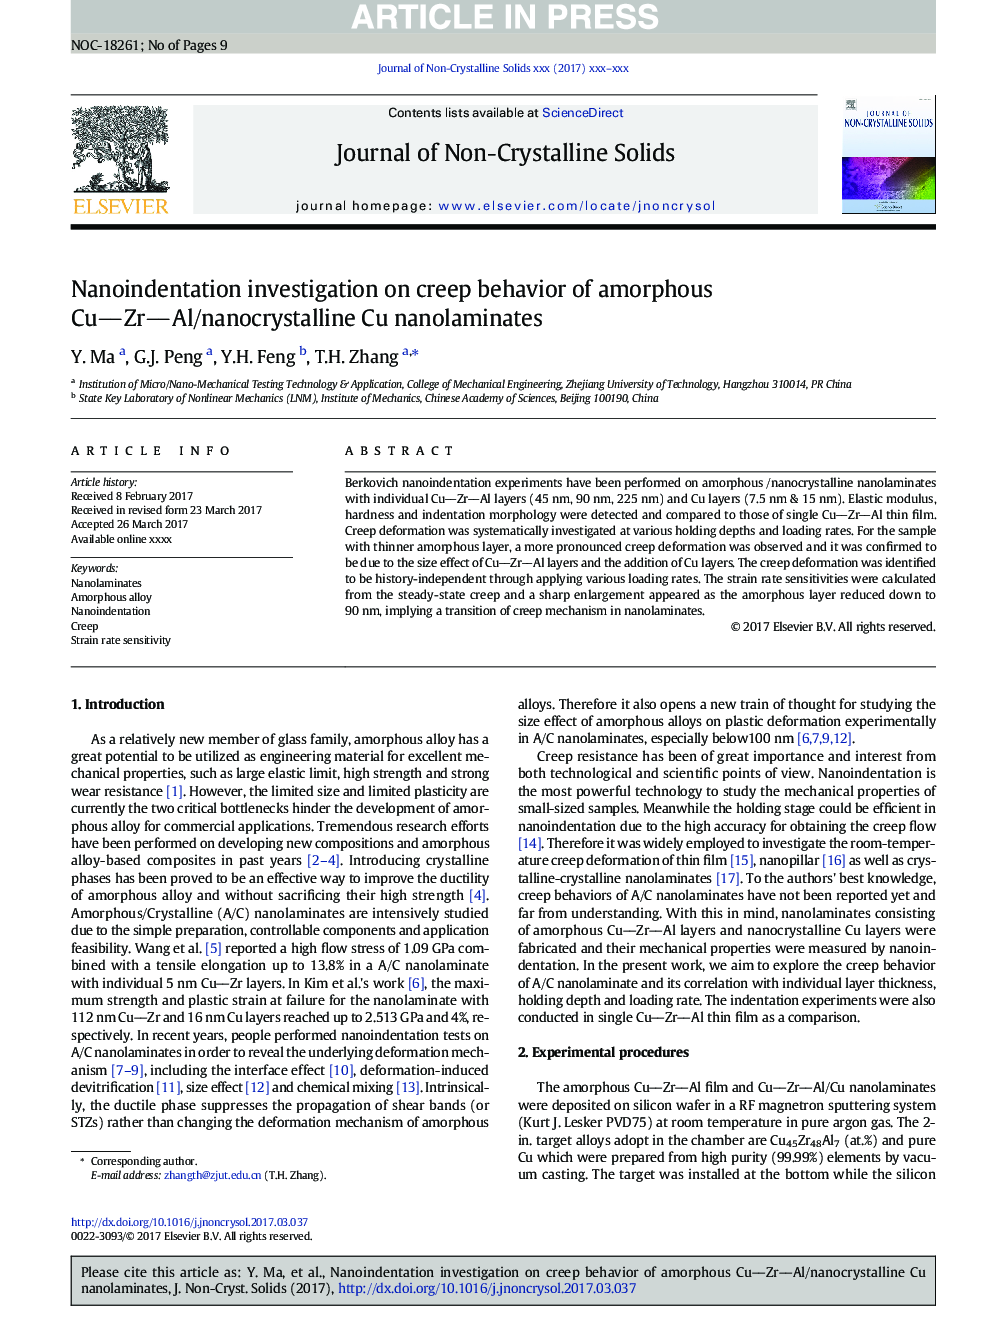 Nanoindentation investigation on creep behavior of amorphous CuZrAl/nanocrystalline Cu nanolaminates